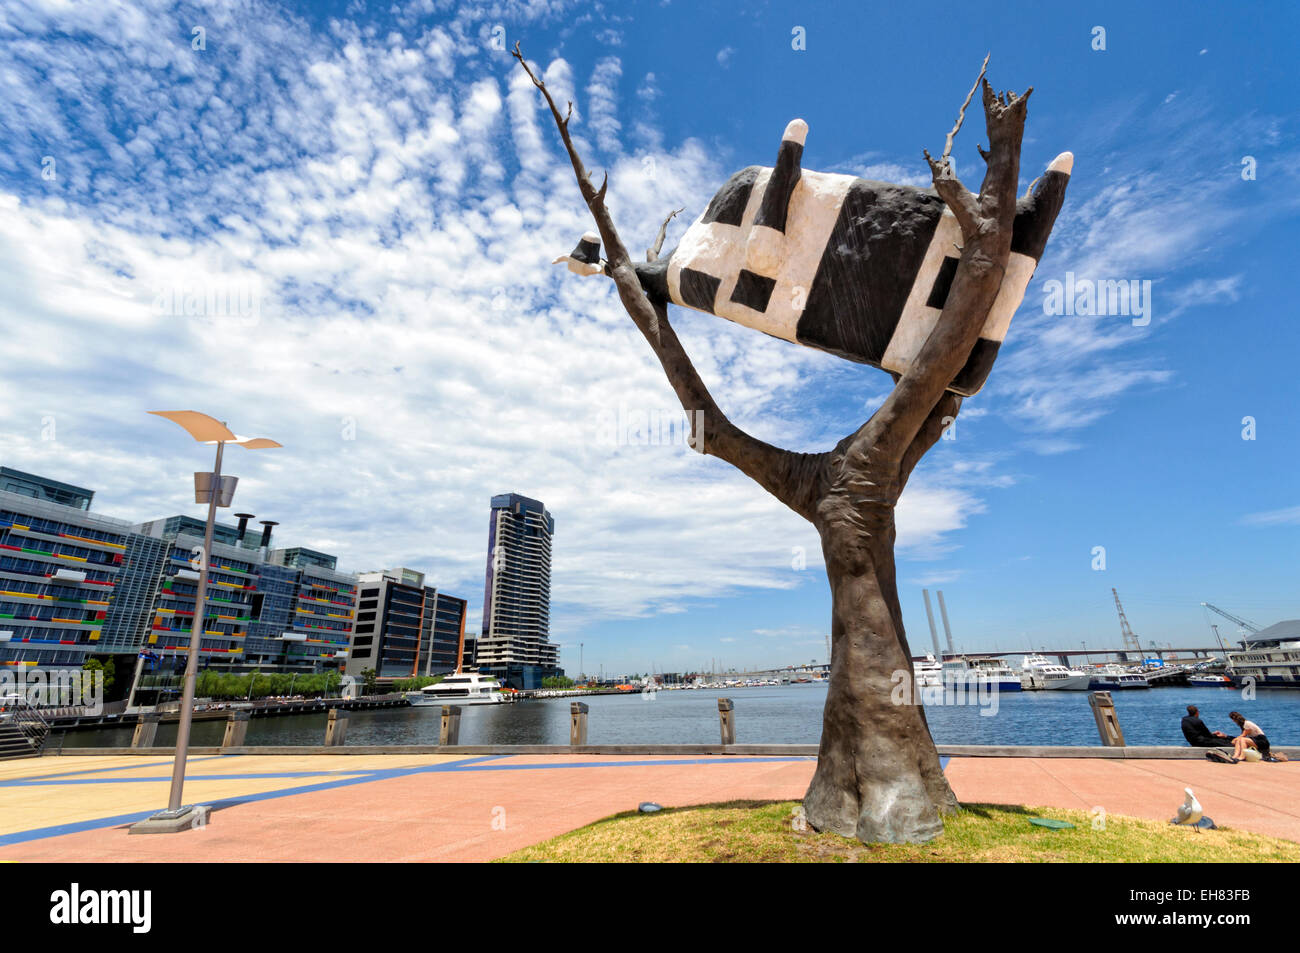 Surreal sculpture of a dead cow stuck up a tree - public art in Melbourne Docklands, Australia, an urban regeneration area. Stock Photo